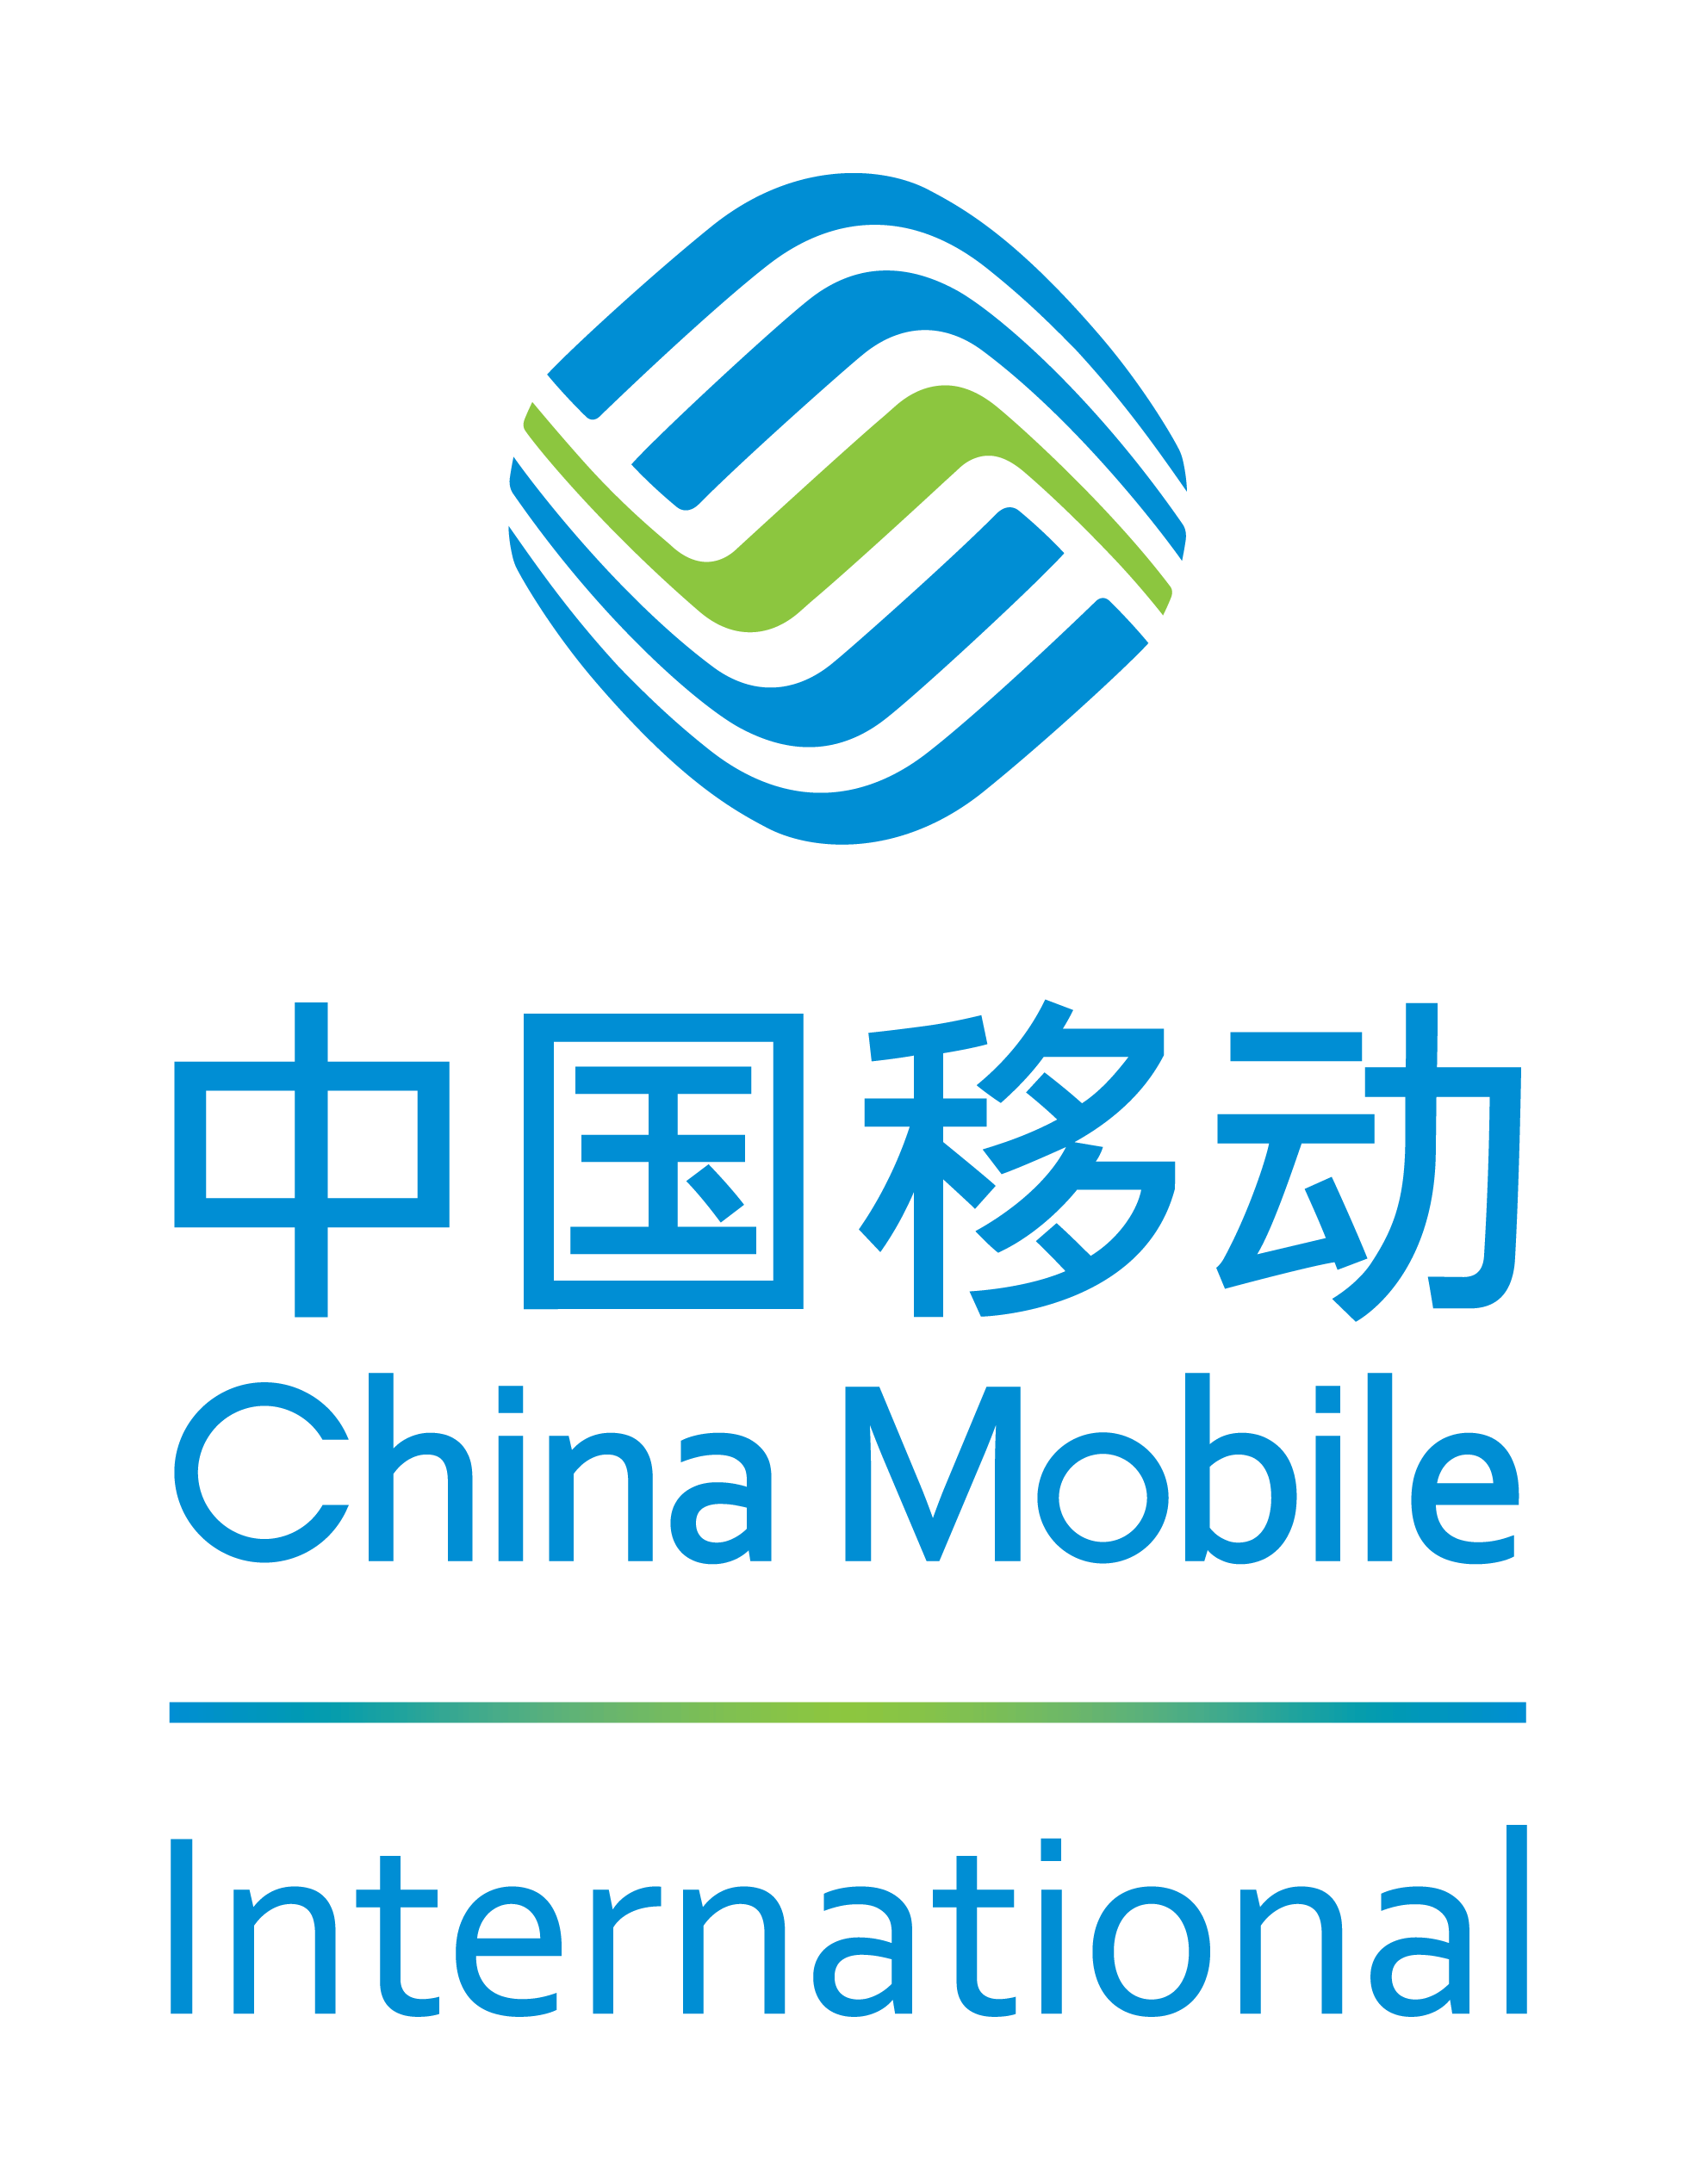 Newsletter - China Mobile International Switzerland